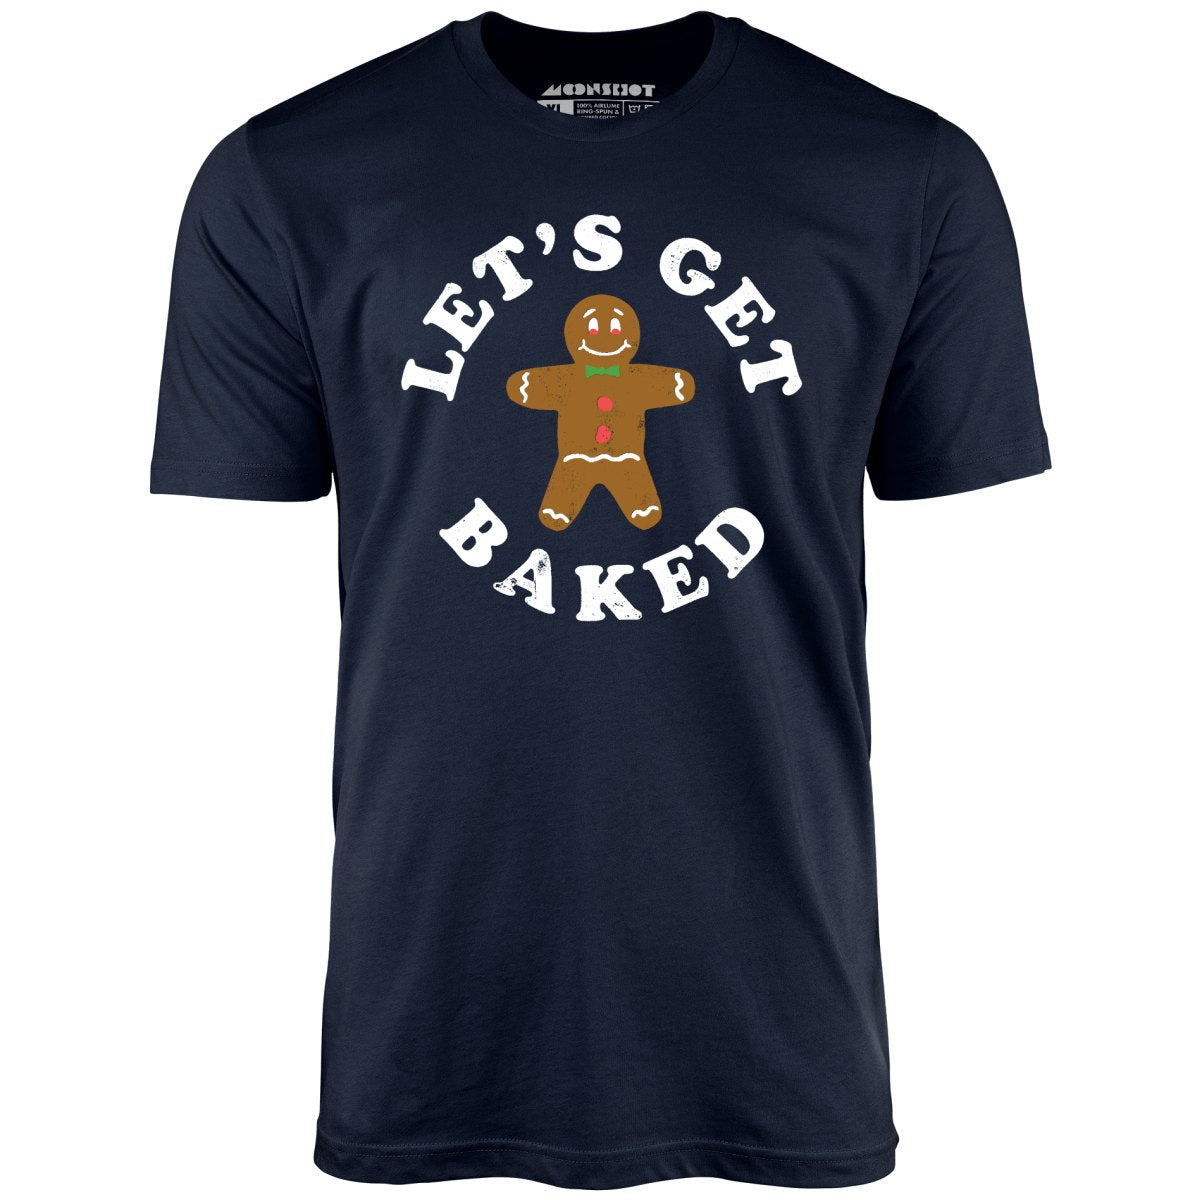 Let's Get Baked - Unisex T-Shirt